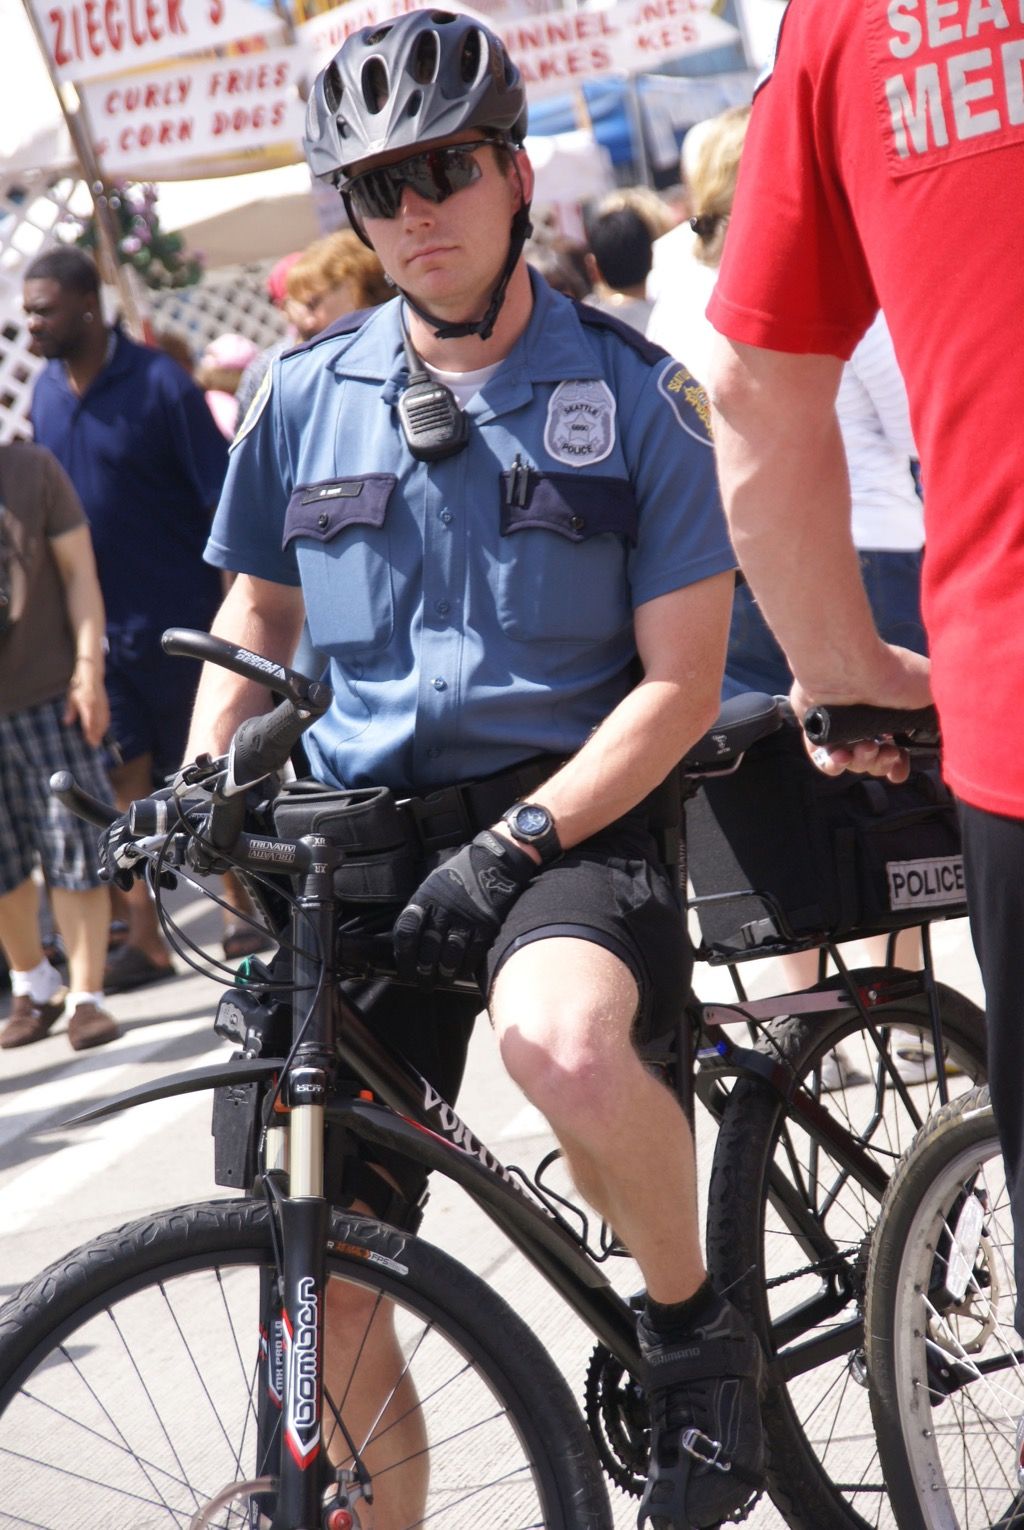 Politibetjent på en cykel